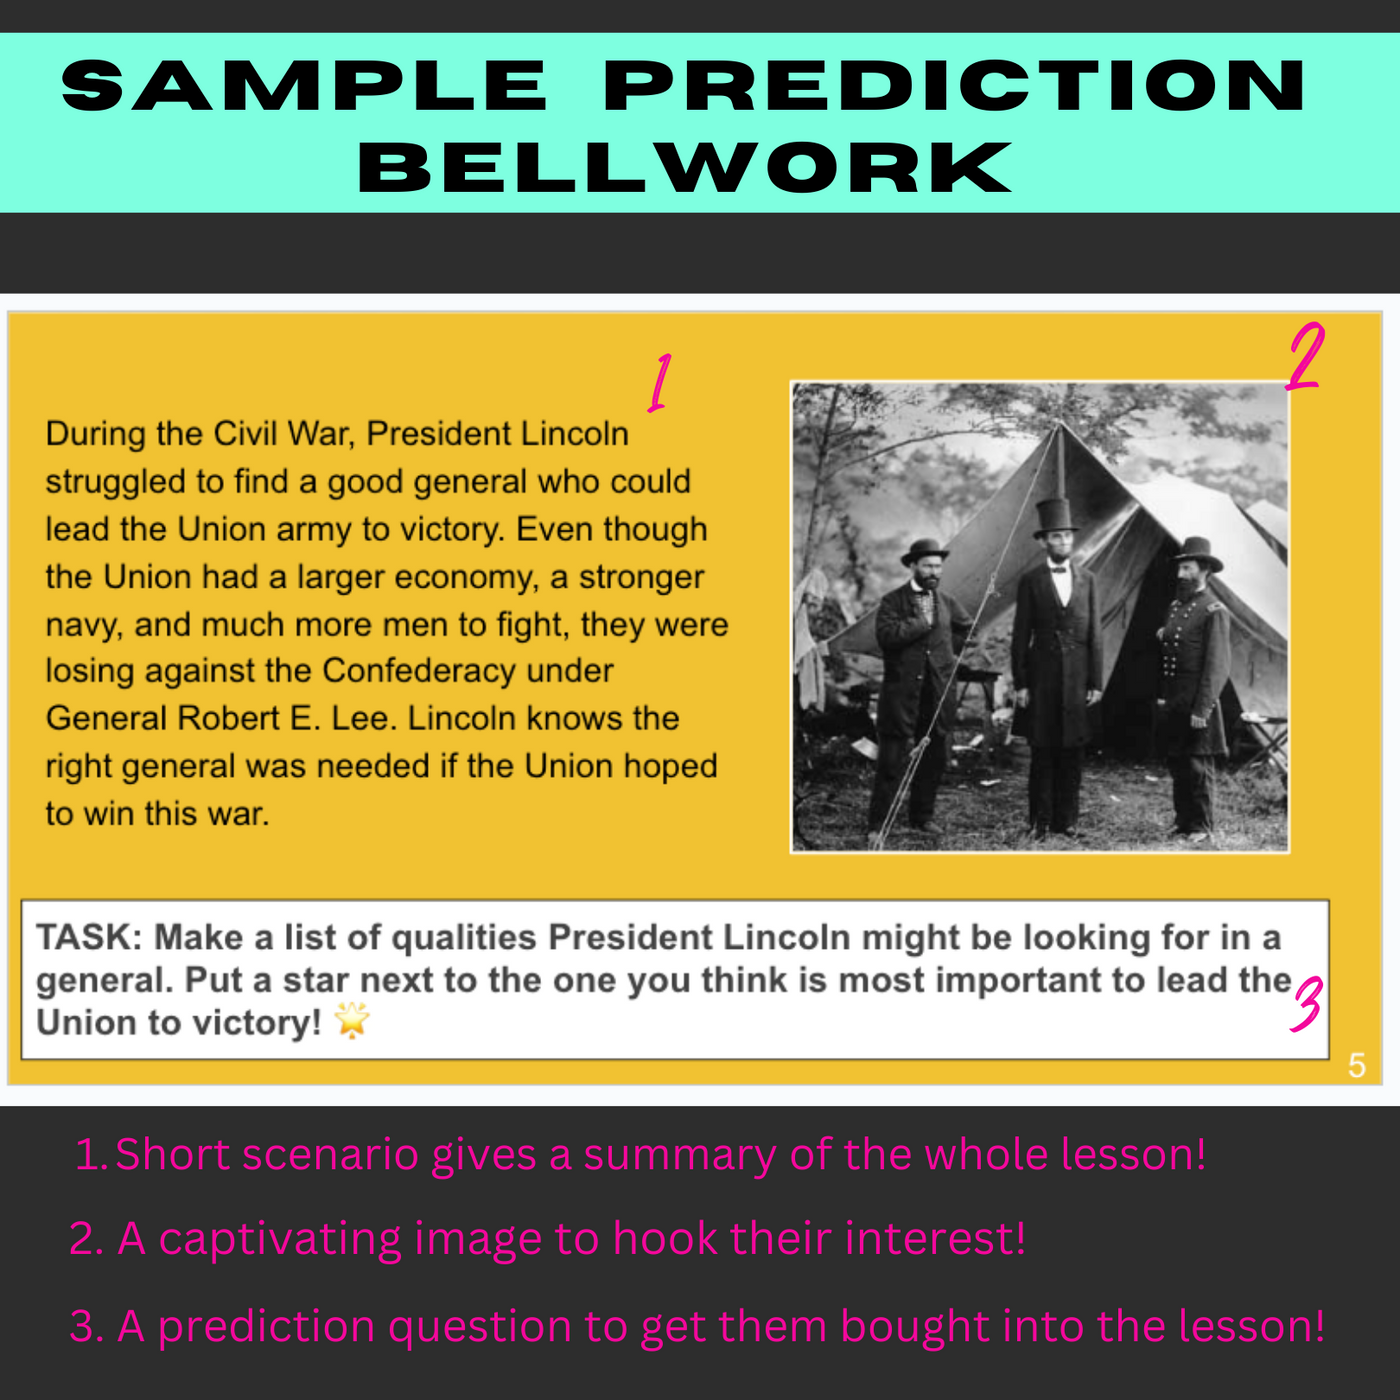 Civil War & Reconstruction Bellworks - Predictions!